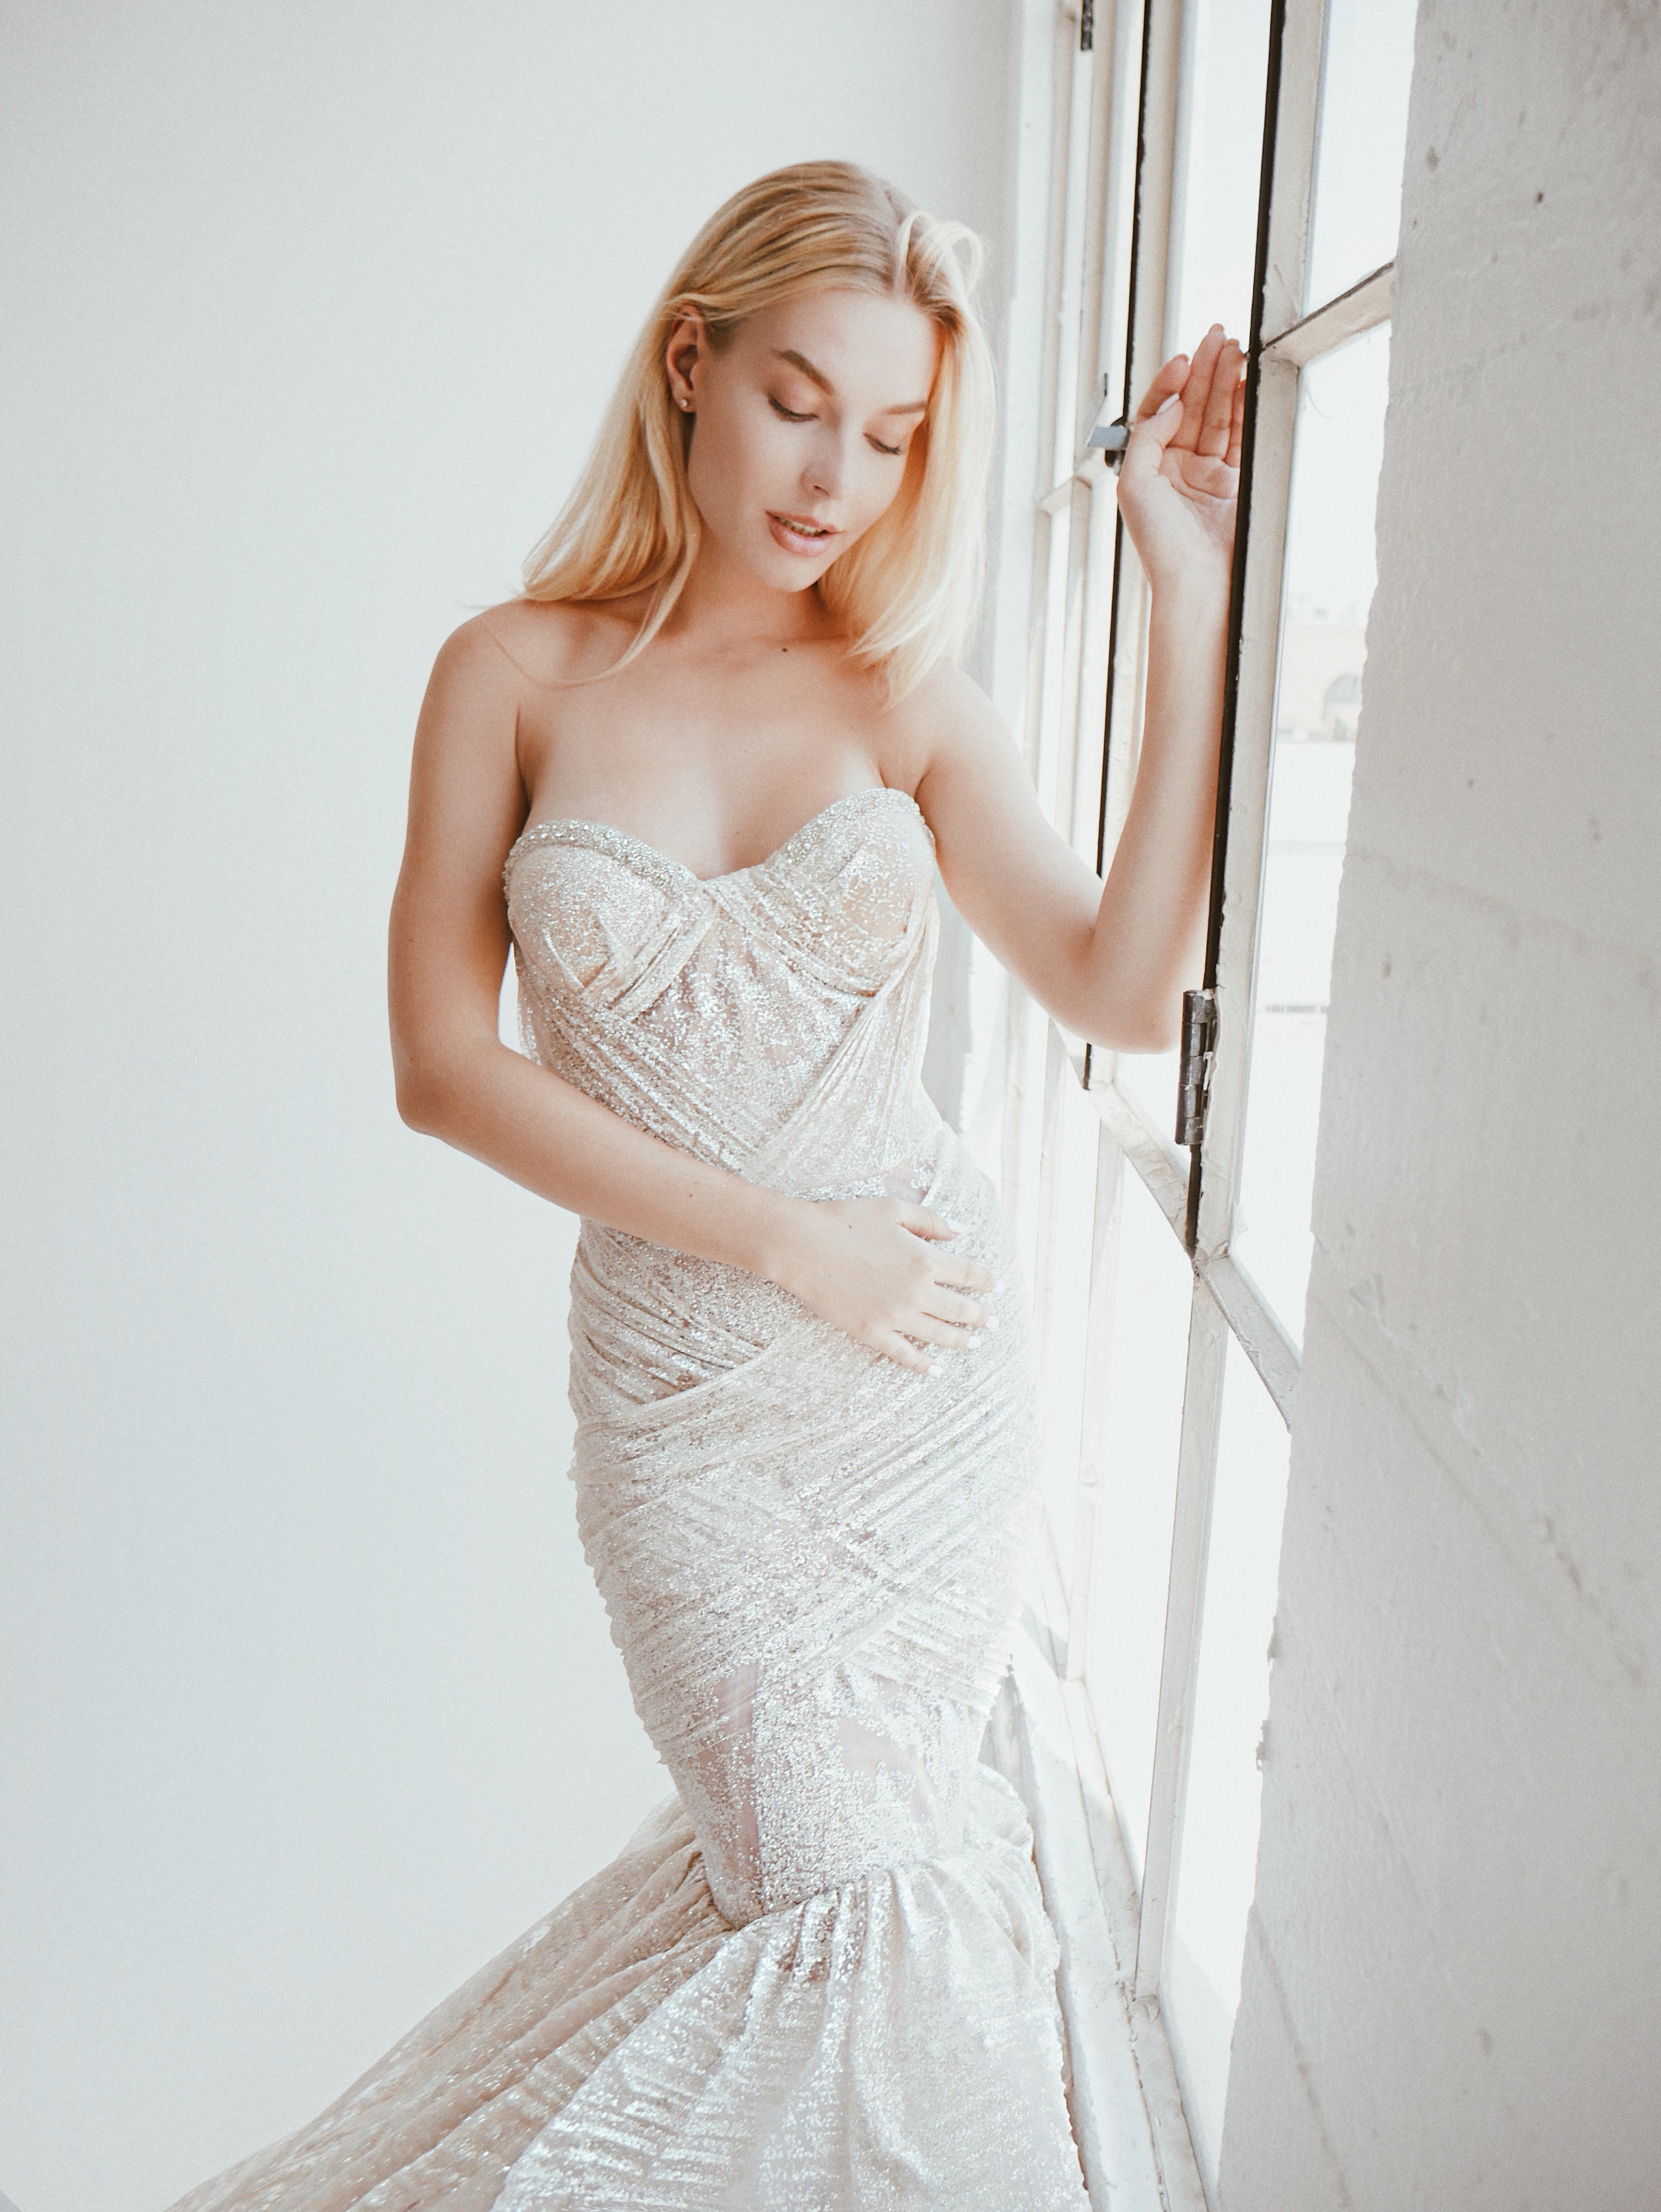 Lauren Elaine Siren gold sparkle mermaid wedding dress with detachable overskirt and train